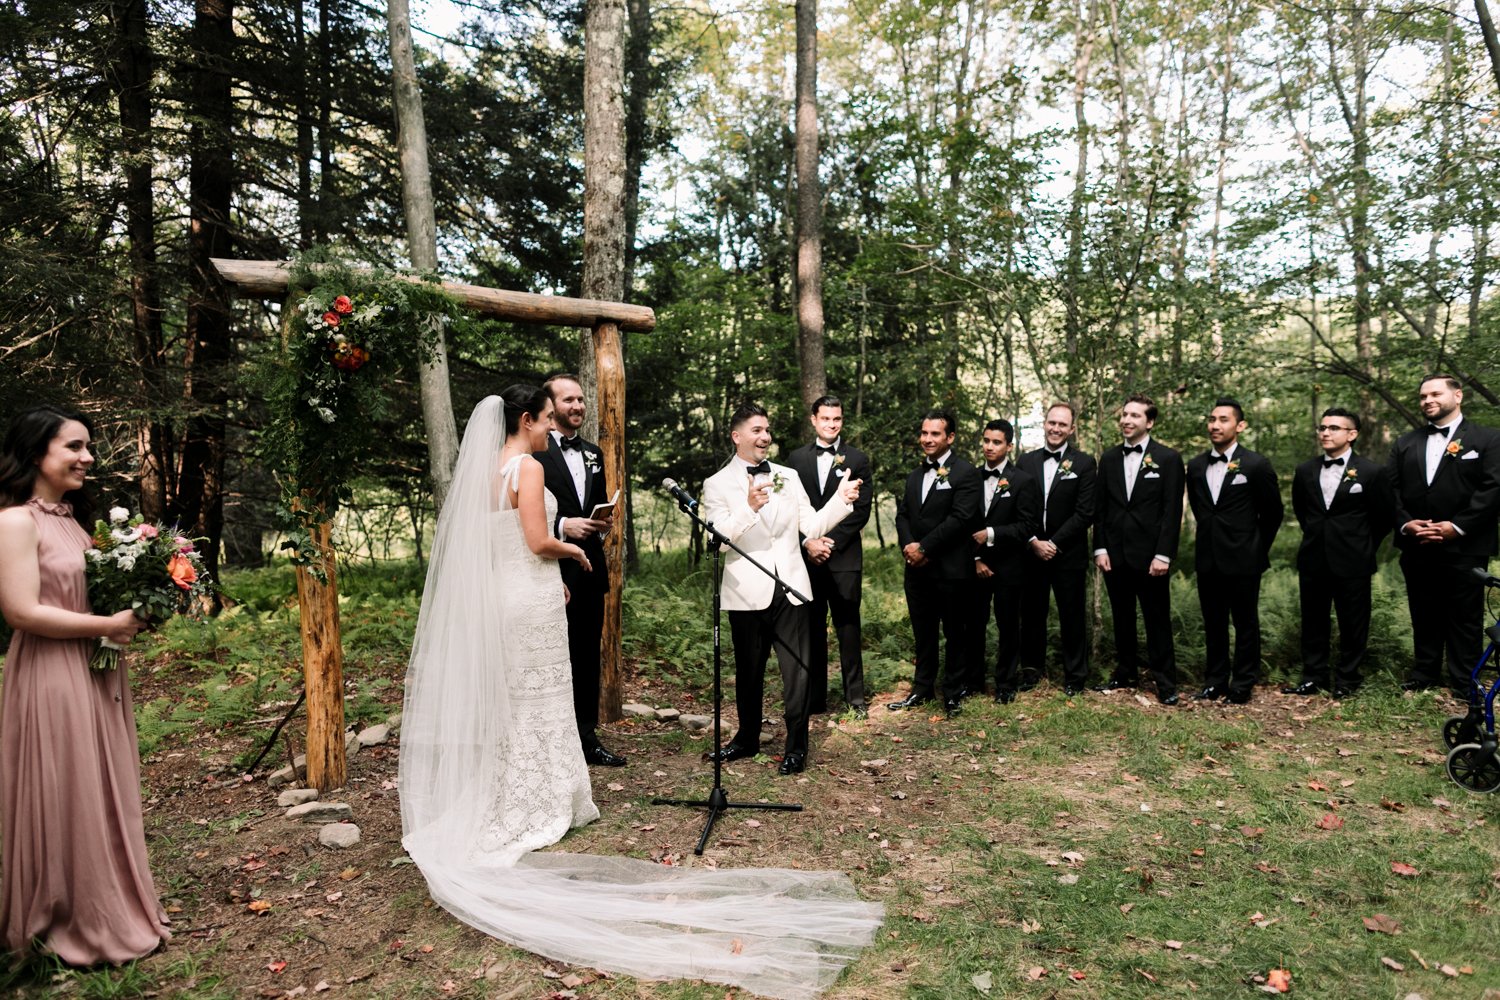 Handsome-Hollow-Catskills-wedding-photographer-61.jpg